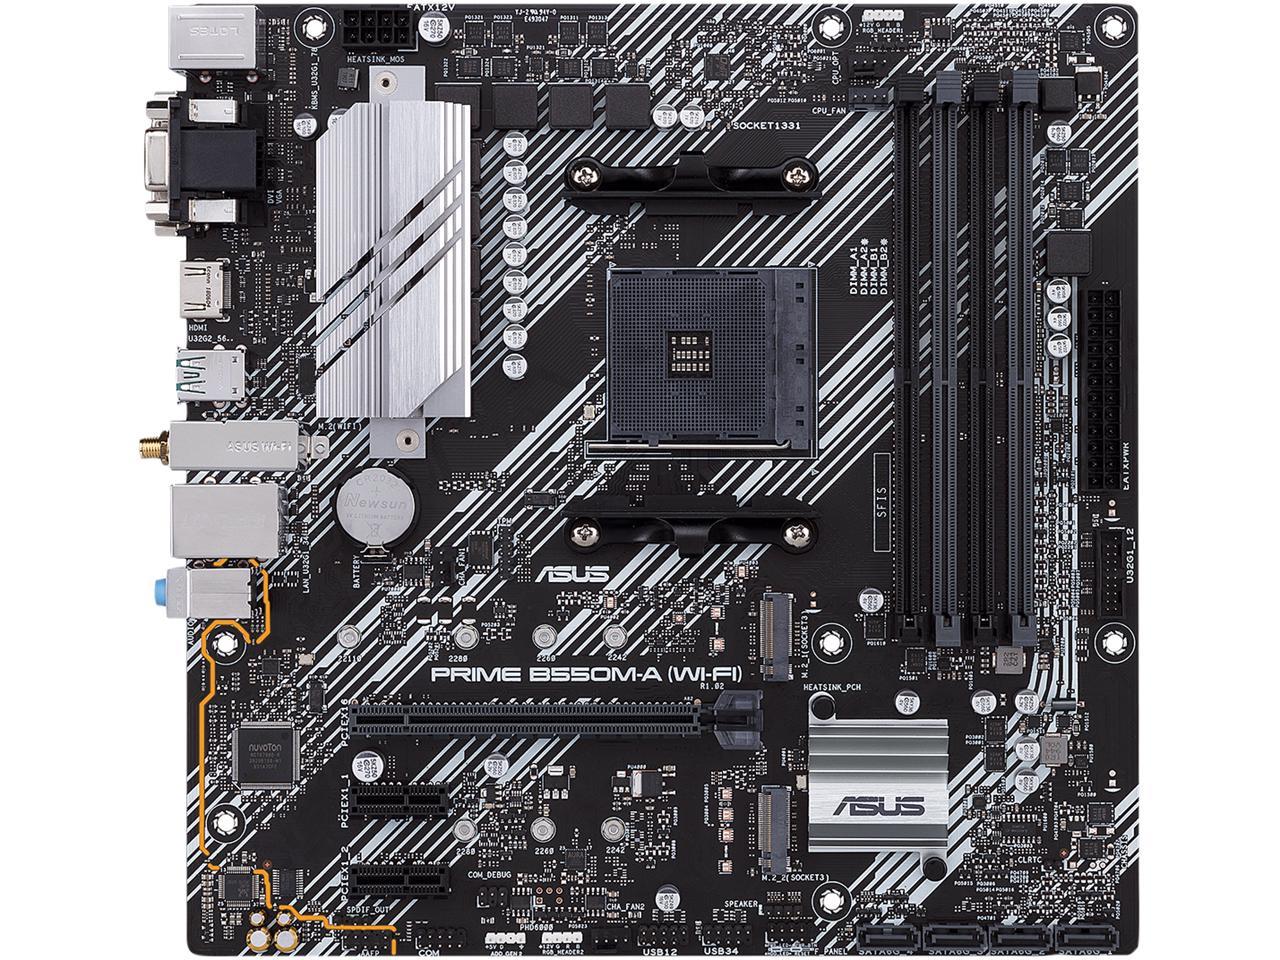 ASUS Prime B550M-A WiFi AMD AM4 (3rd Gen Ryzen) Micro ATX Motherboard (PCIe 4.0, WiFi 6, ECC Memory, 1Gb LAN, HDMI 2.1/D-Sub, 4K@60HZ, Addressable Gen 2 RGB Header and Aura Sync)